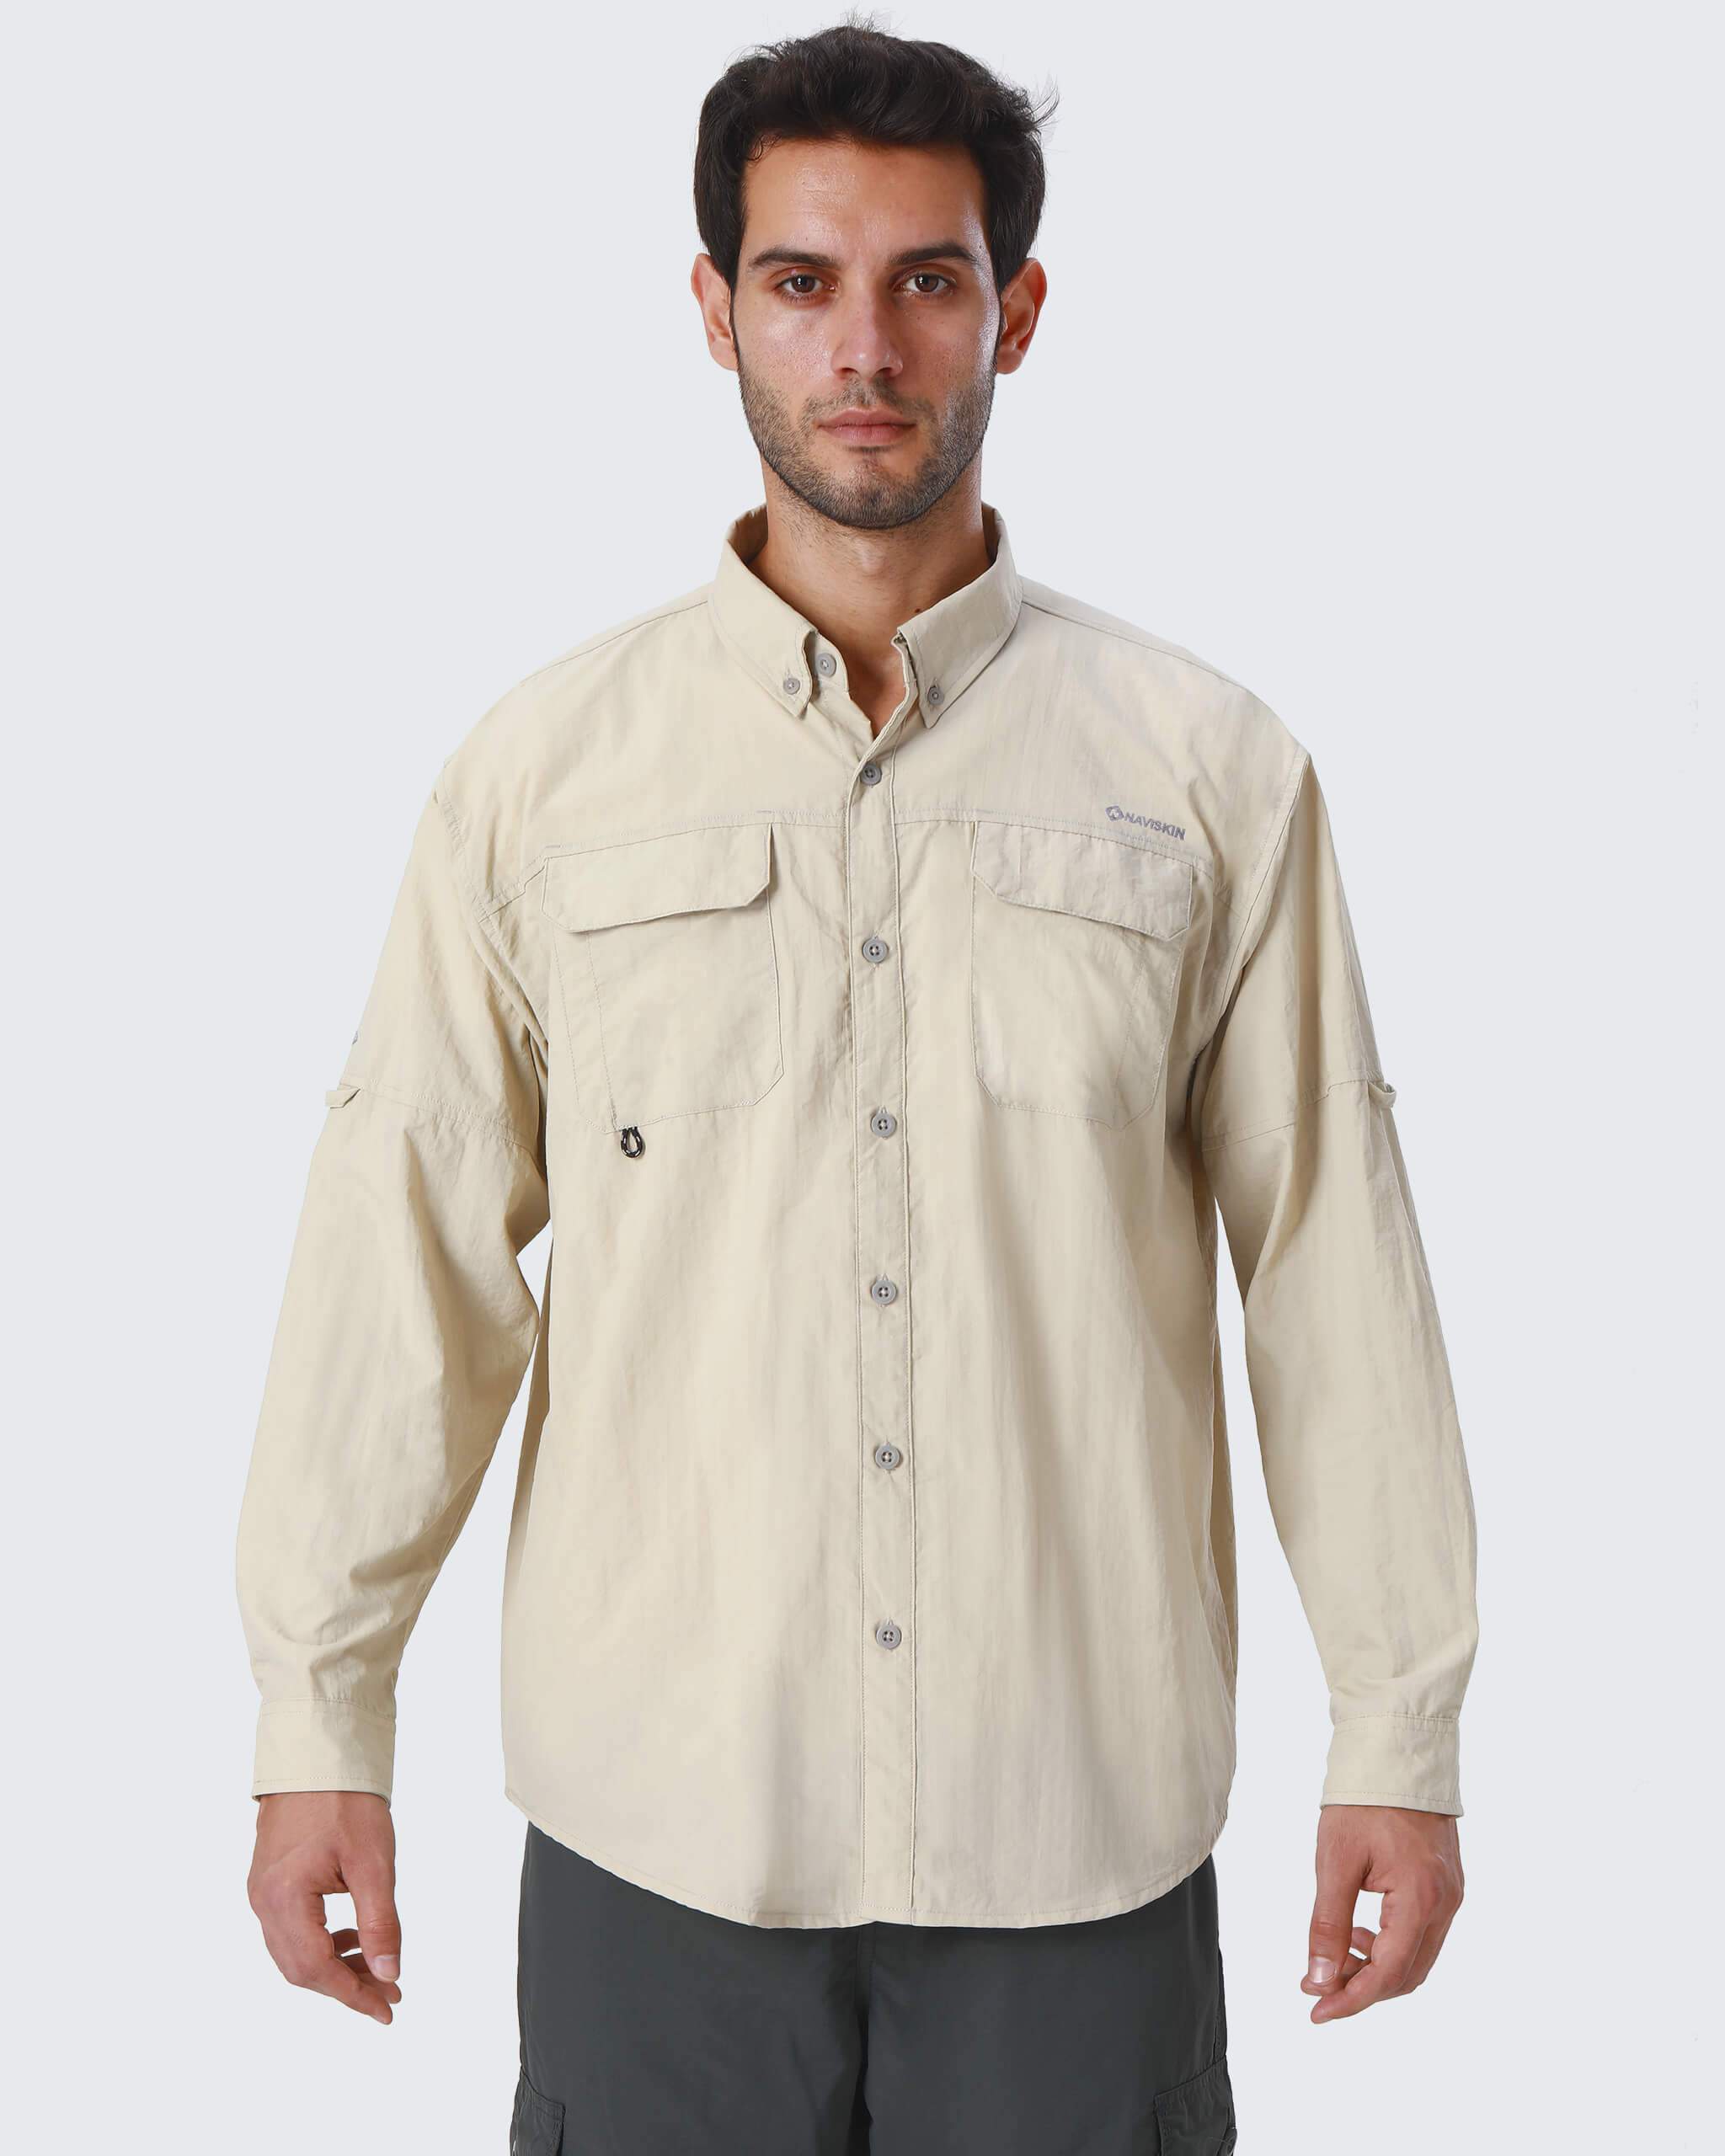 NAVISKIN Men's UPF 50+ Sun Protection Clothing Hiking Fishing Shirt Lightweight Quick Dry SPF Outdoor Long Sleeve Shirt, Khaki / X-Large